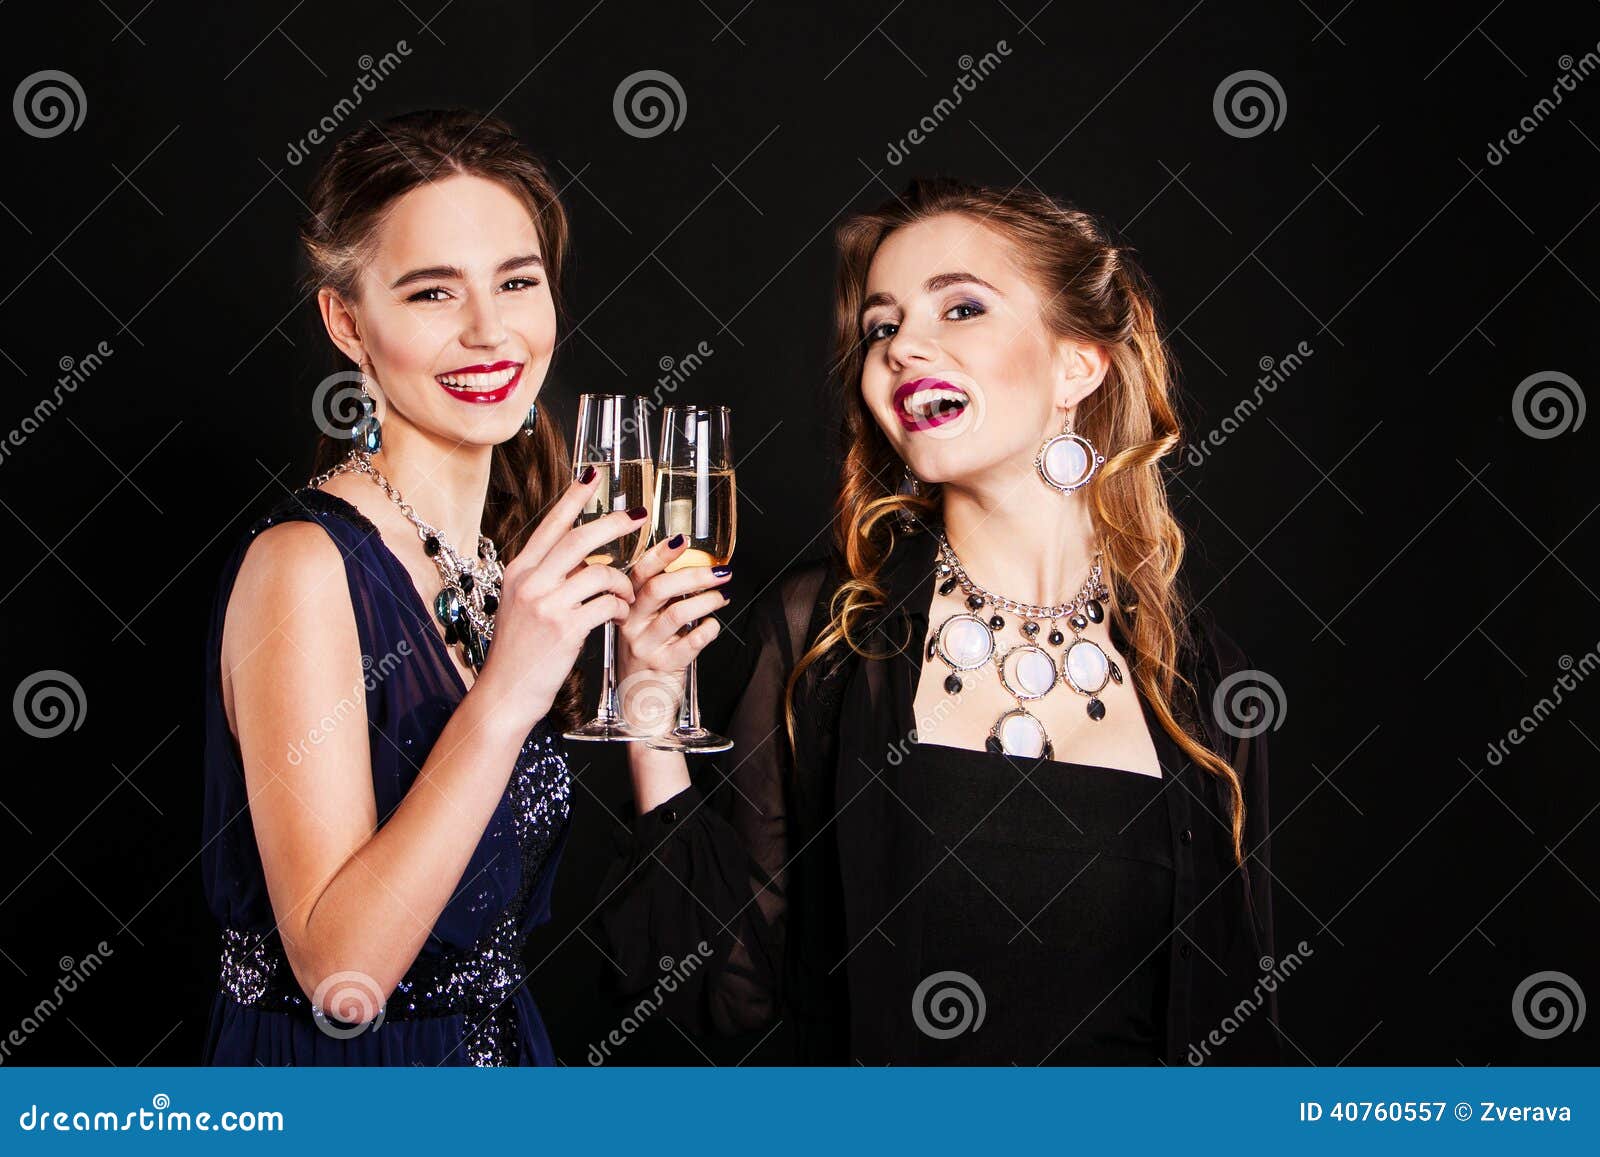 https://thumbs.dreamstime.com/z/two-stylish-young-women-glasses-champagne-portrait-celebration-40760557.jpg